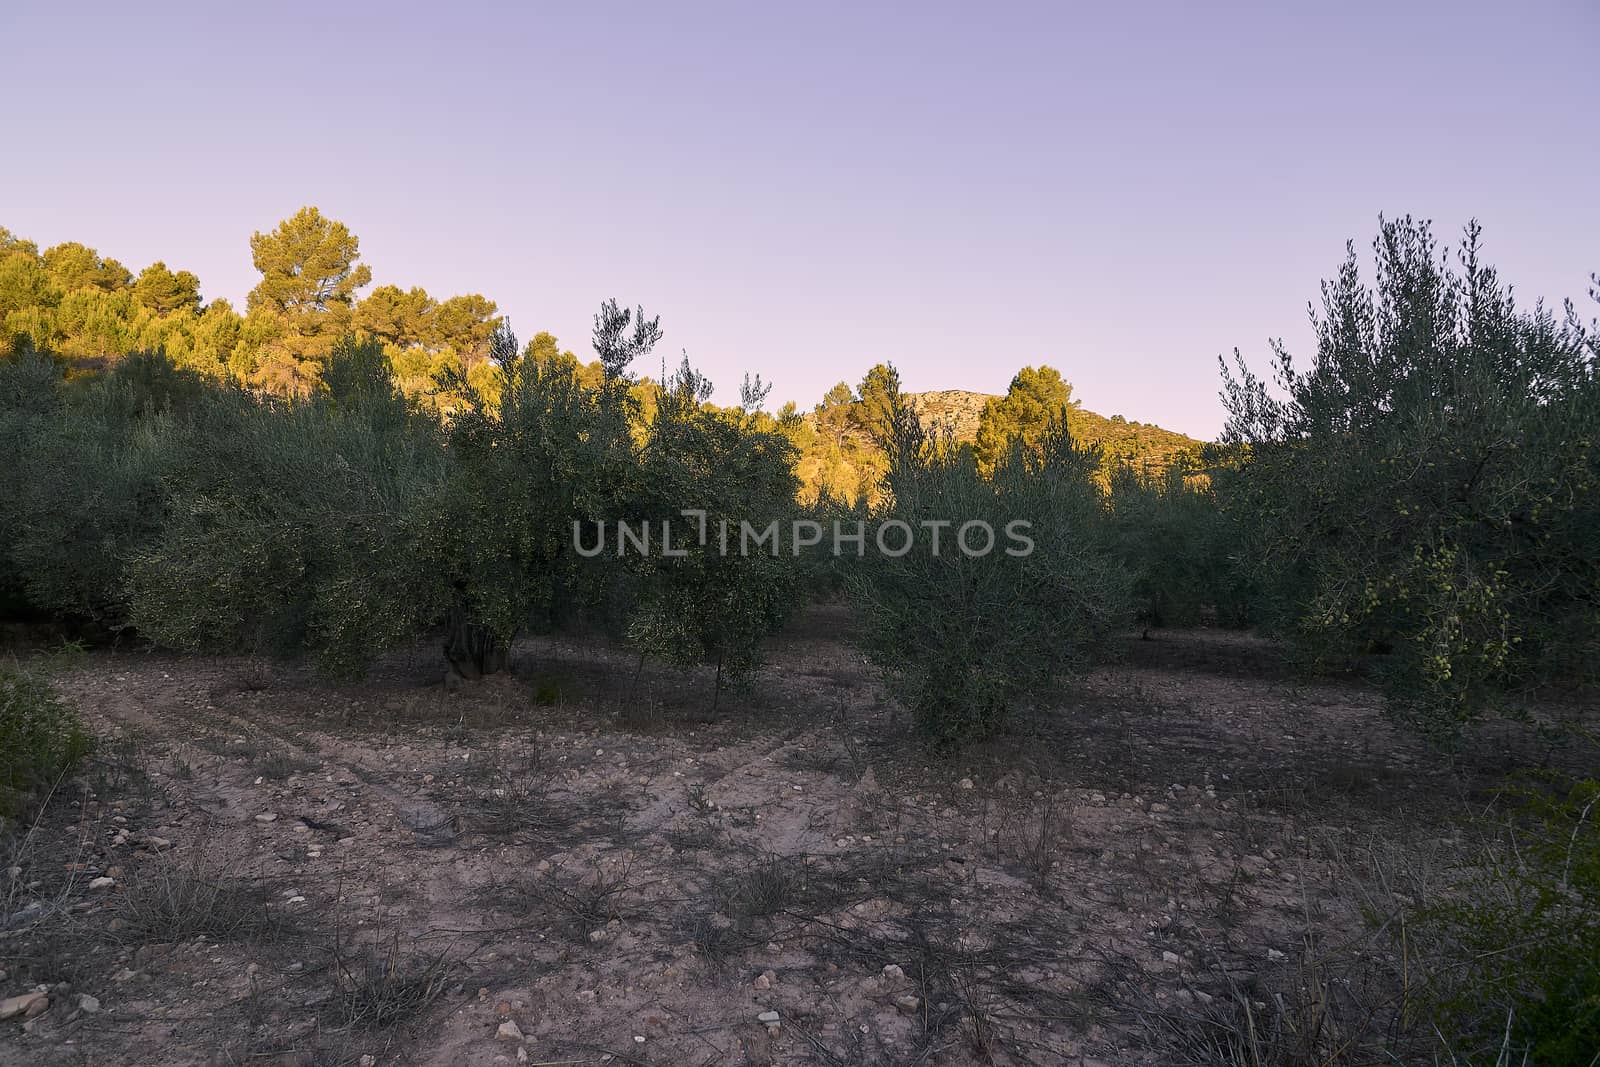 Olive fields full of olives for harvest, organic farming, centenary trees